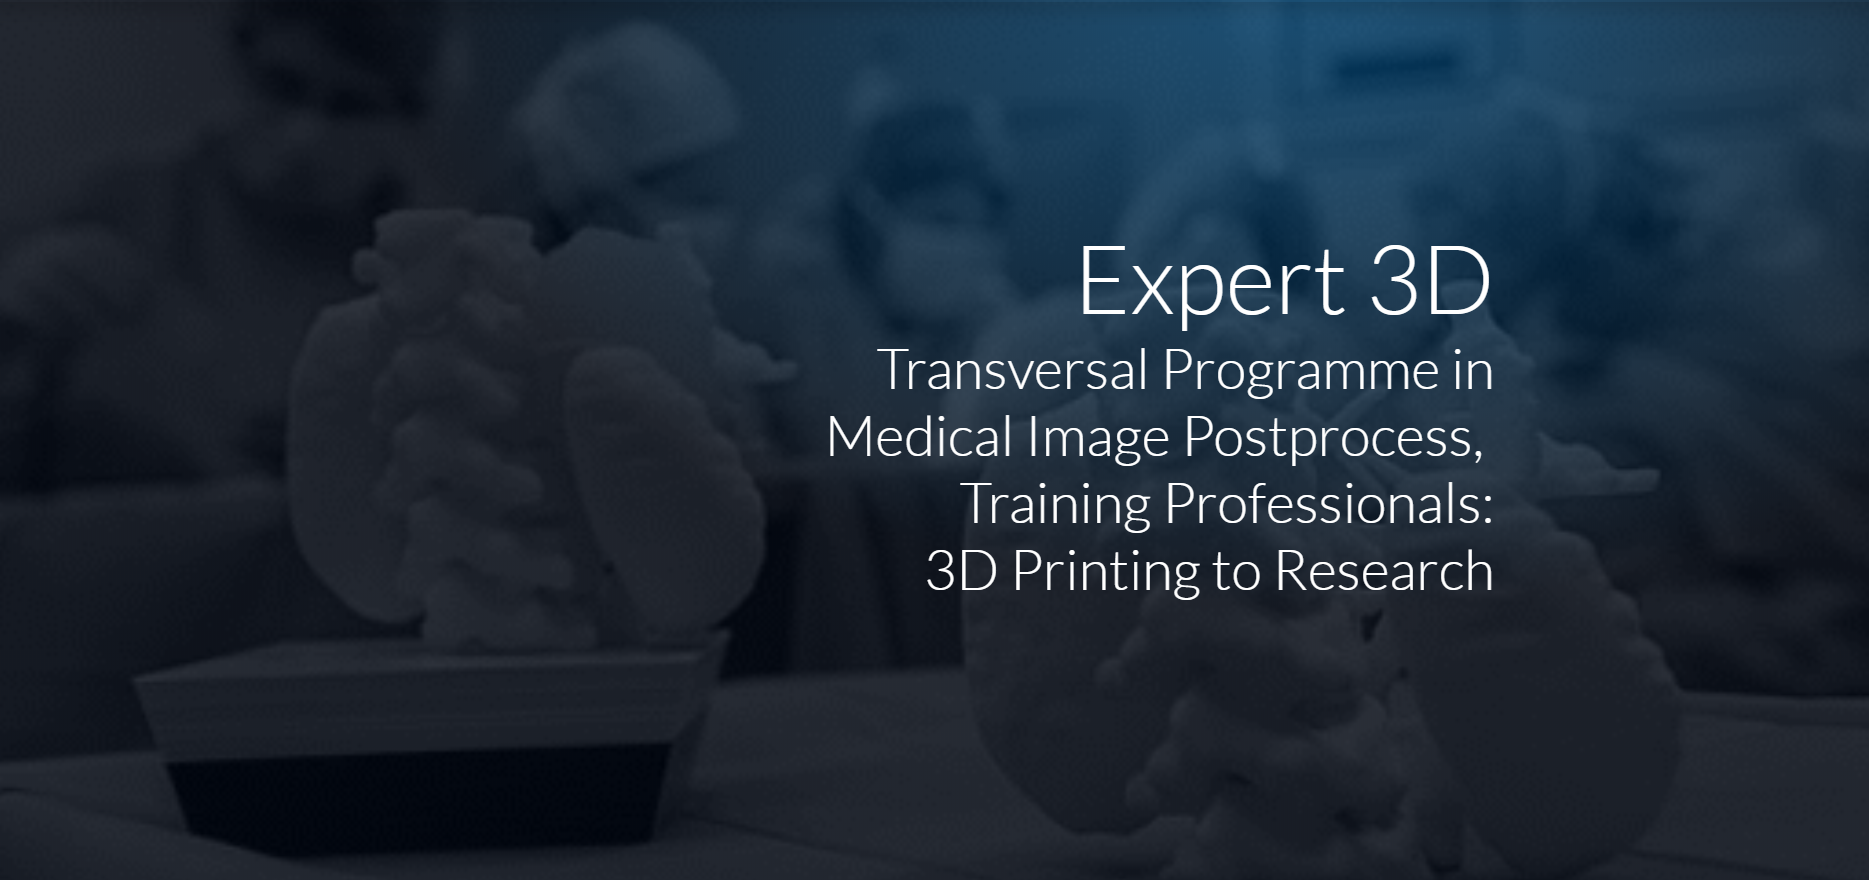 Immagine relativa al contenuto Expert 3D: Comprehensive Transversal Programme